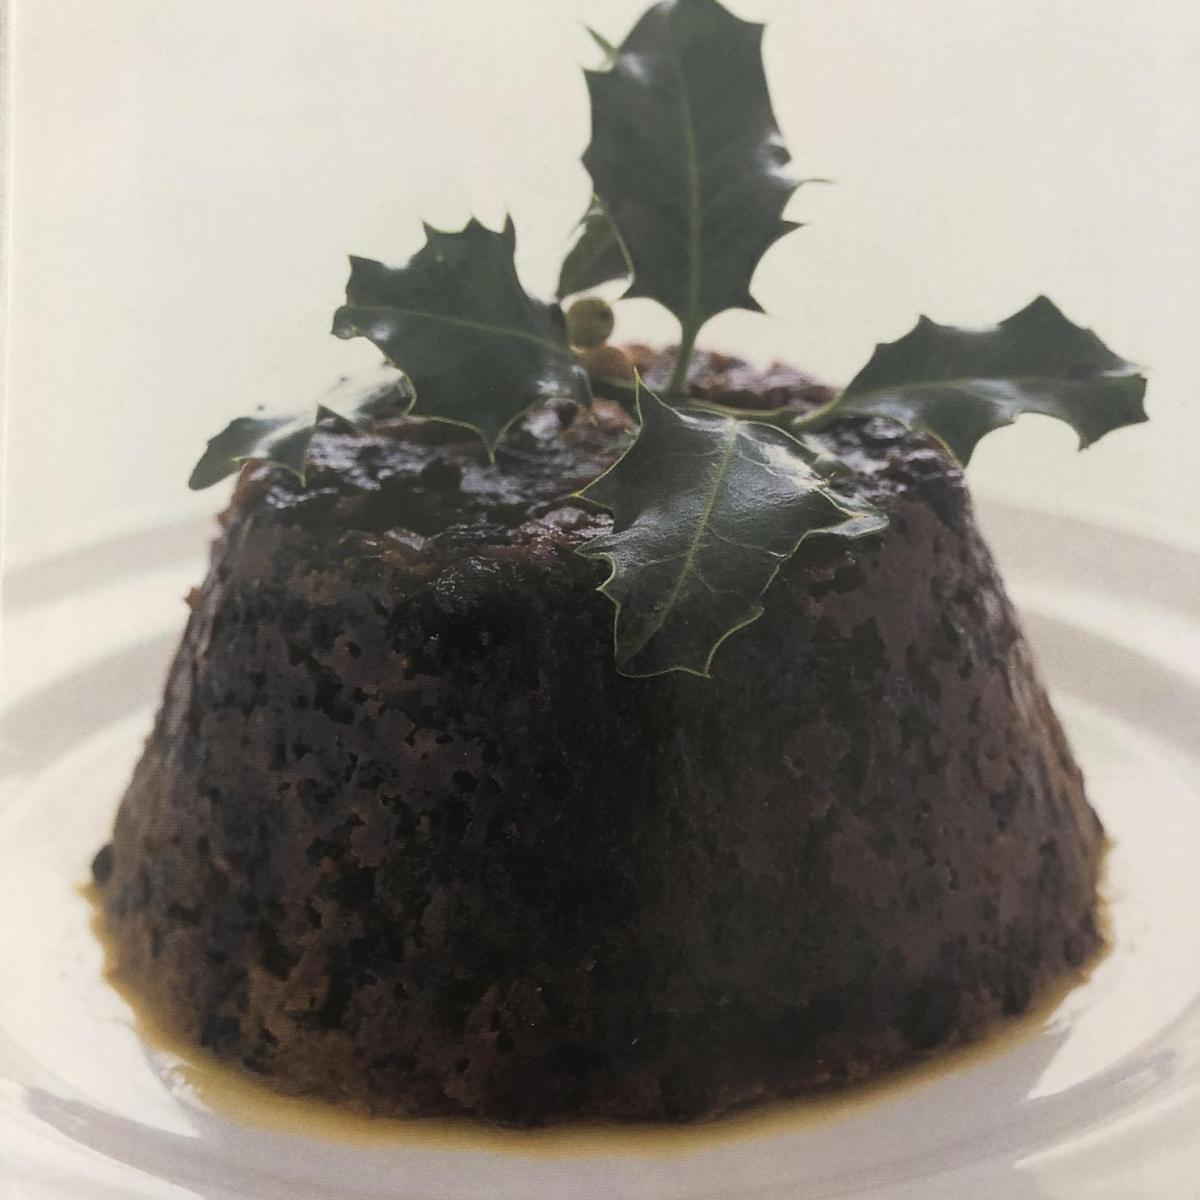 Christmas pudding recipe - BBC Food